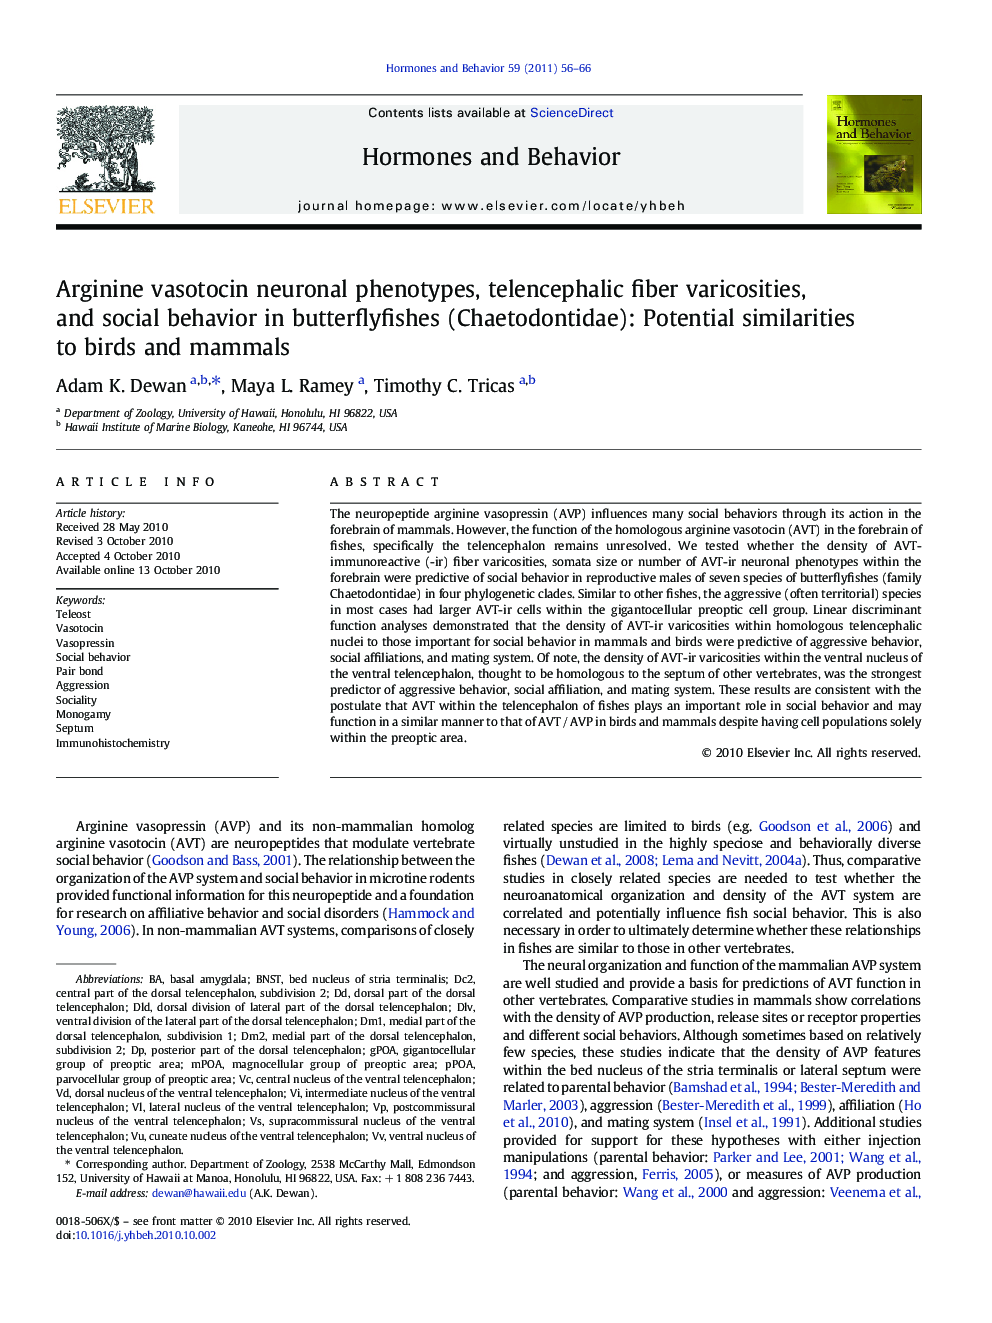 Arginine vasotocin neuronal phenotypes, telencephalic fiber varicosities, and social behavior in butterflyfishes (Chaetodontidae): Potential similarities to birds and mammals